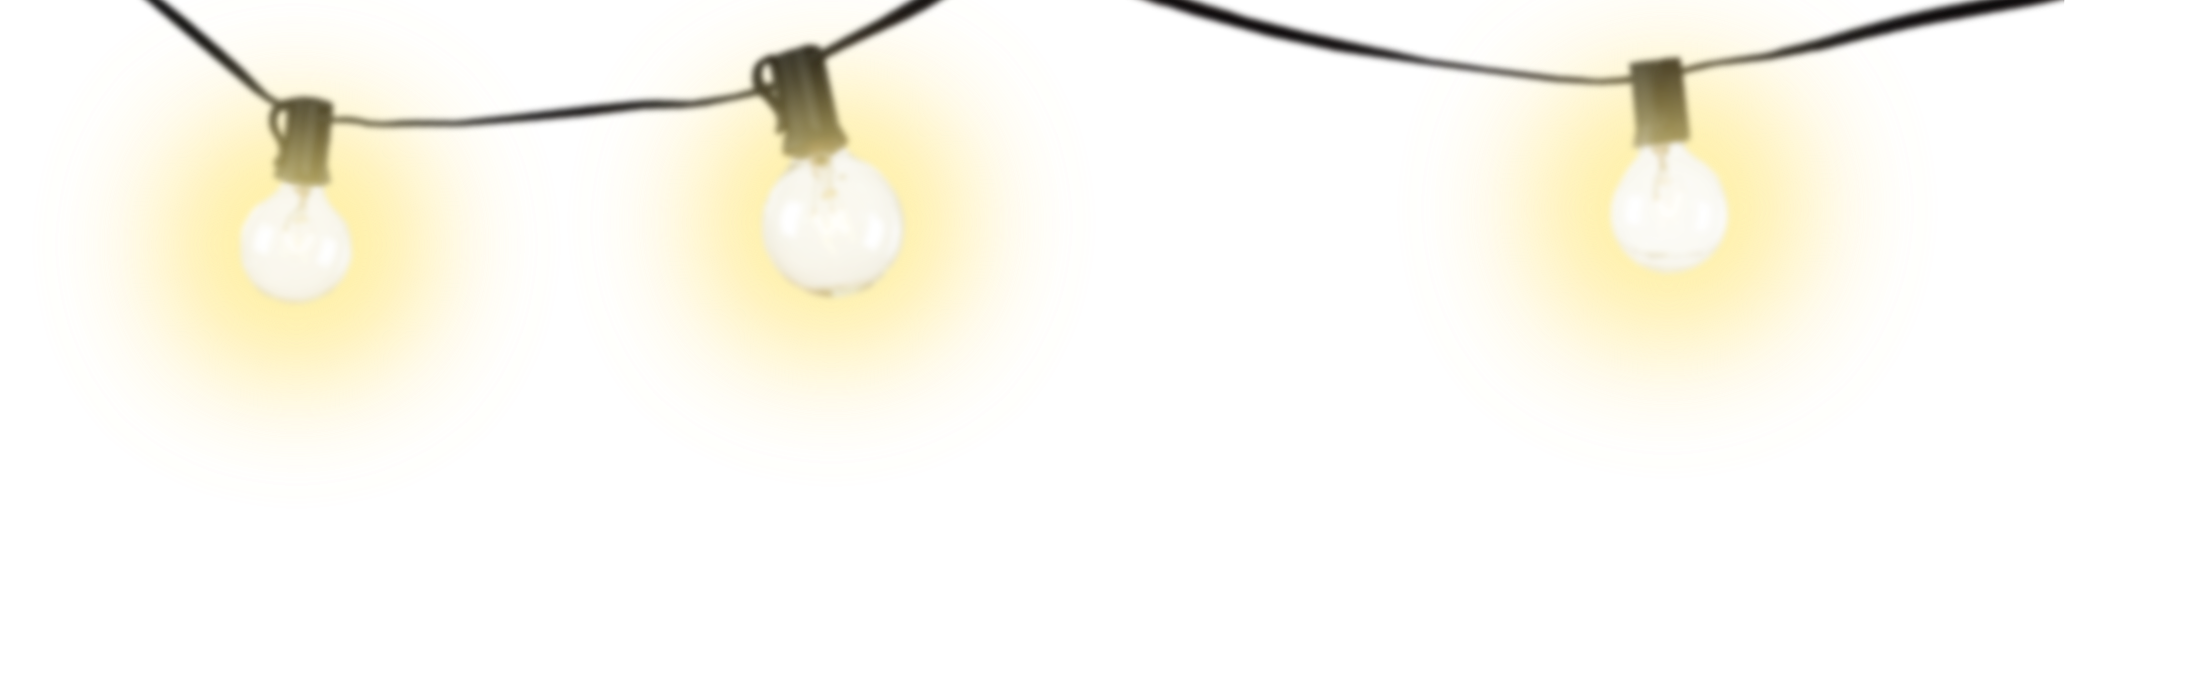 Decorative Light Bulb PNG High-Quality Image